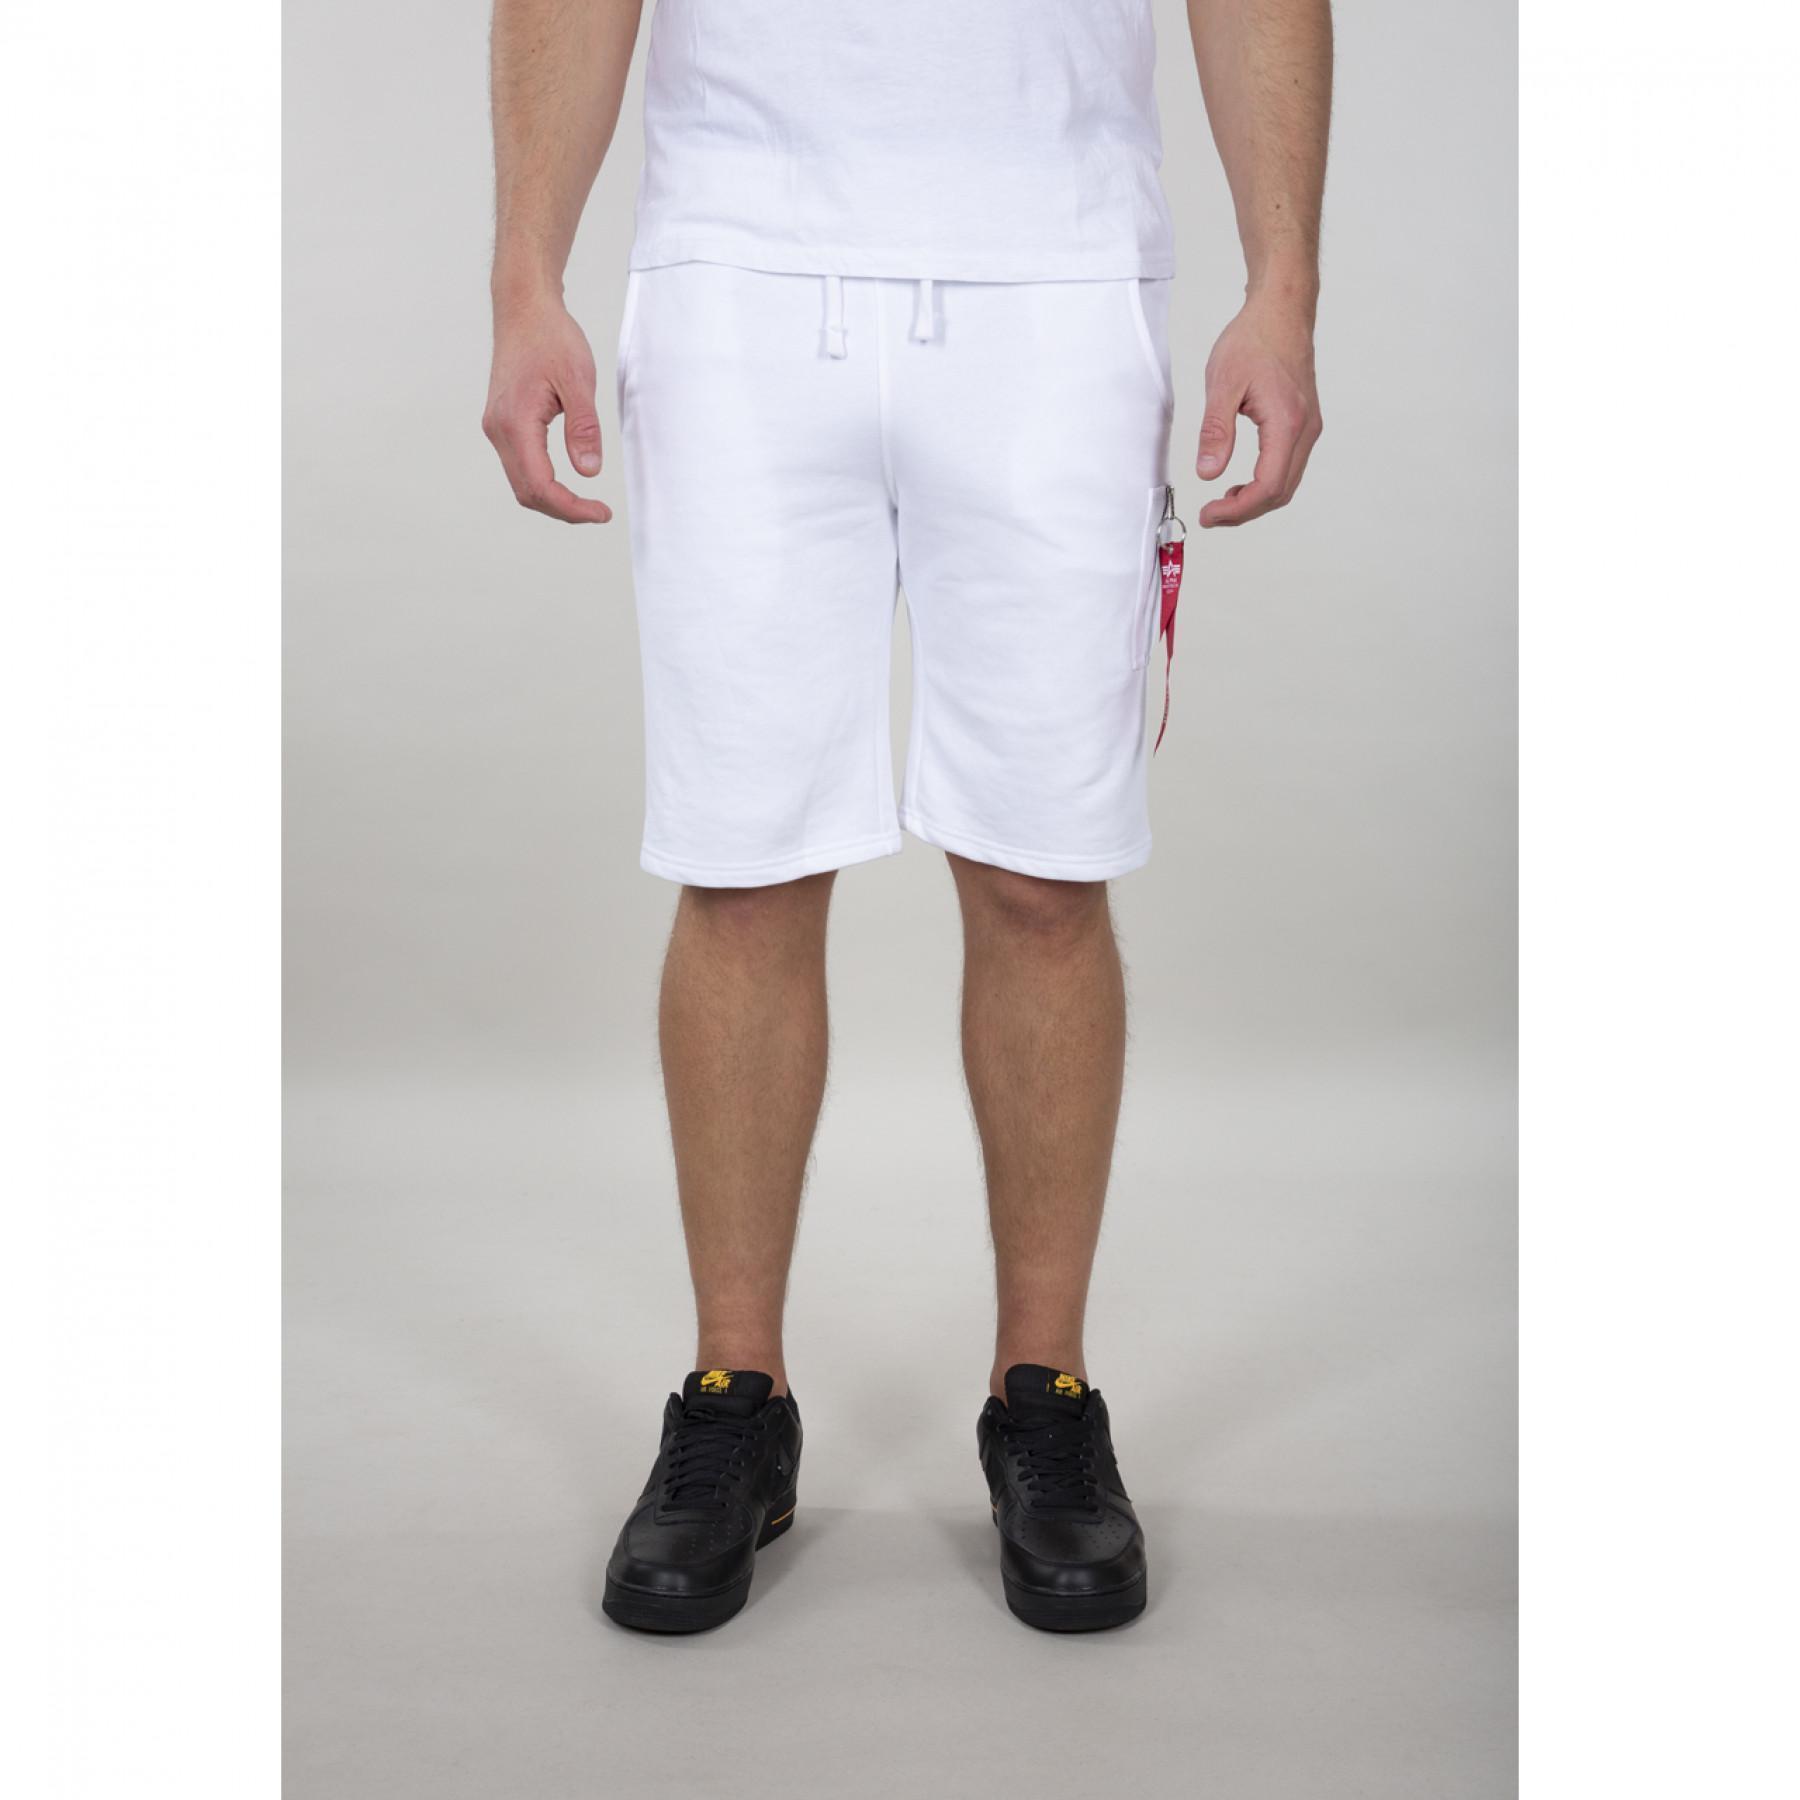 - Cargo Shorts Alpha Men - shorts X-Fit - Clothing Industries